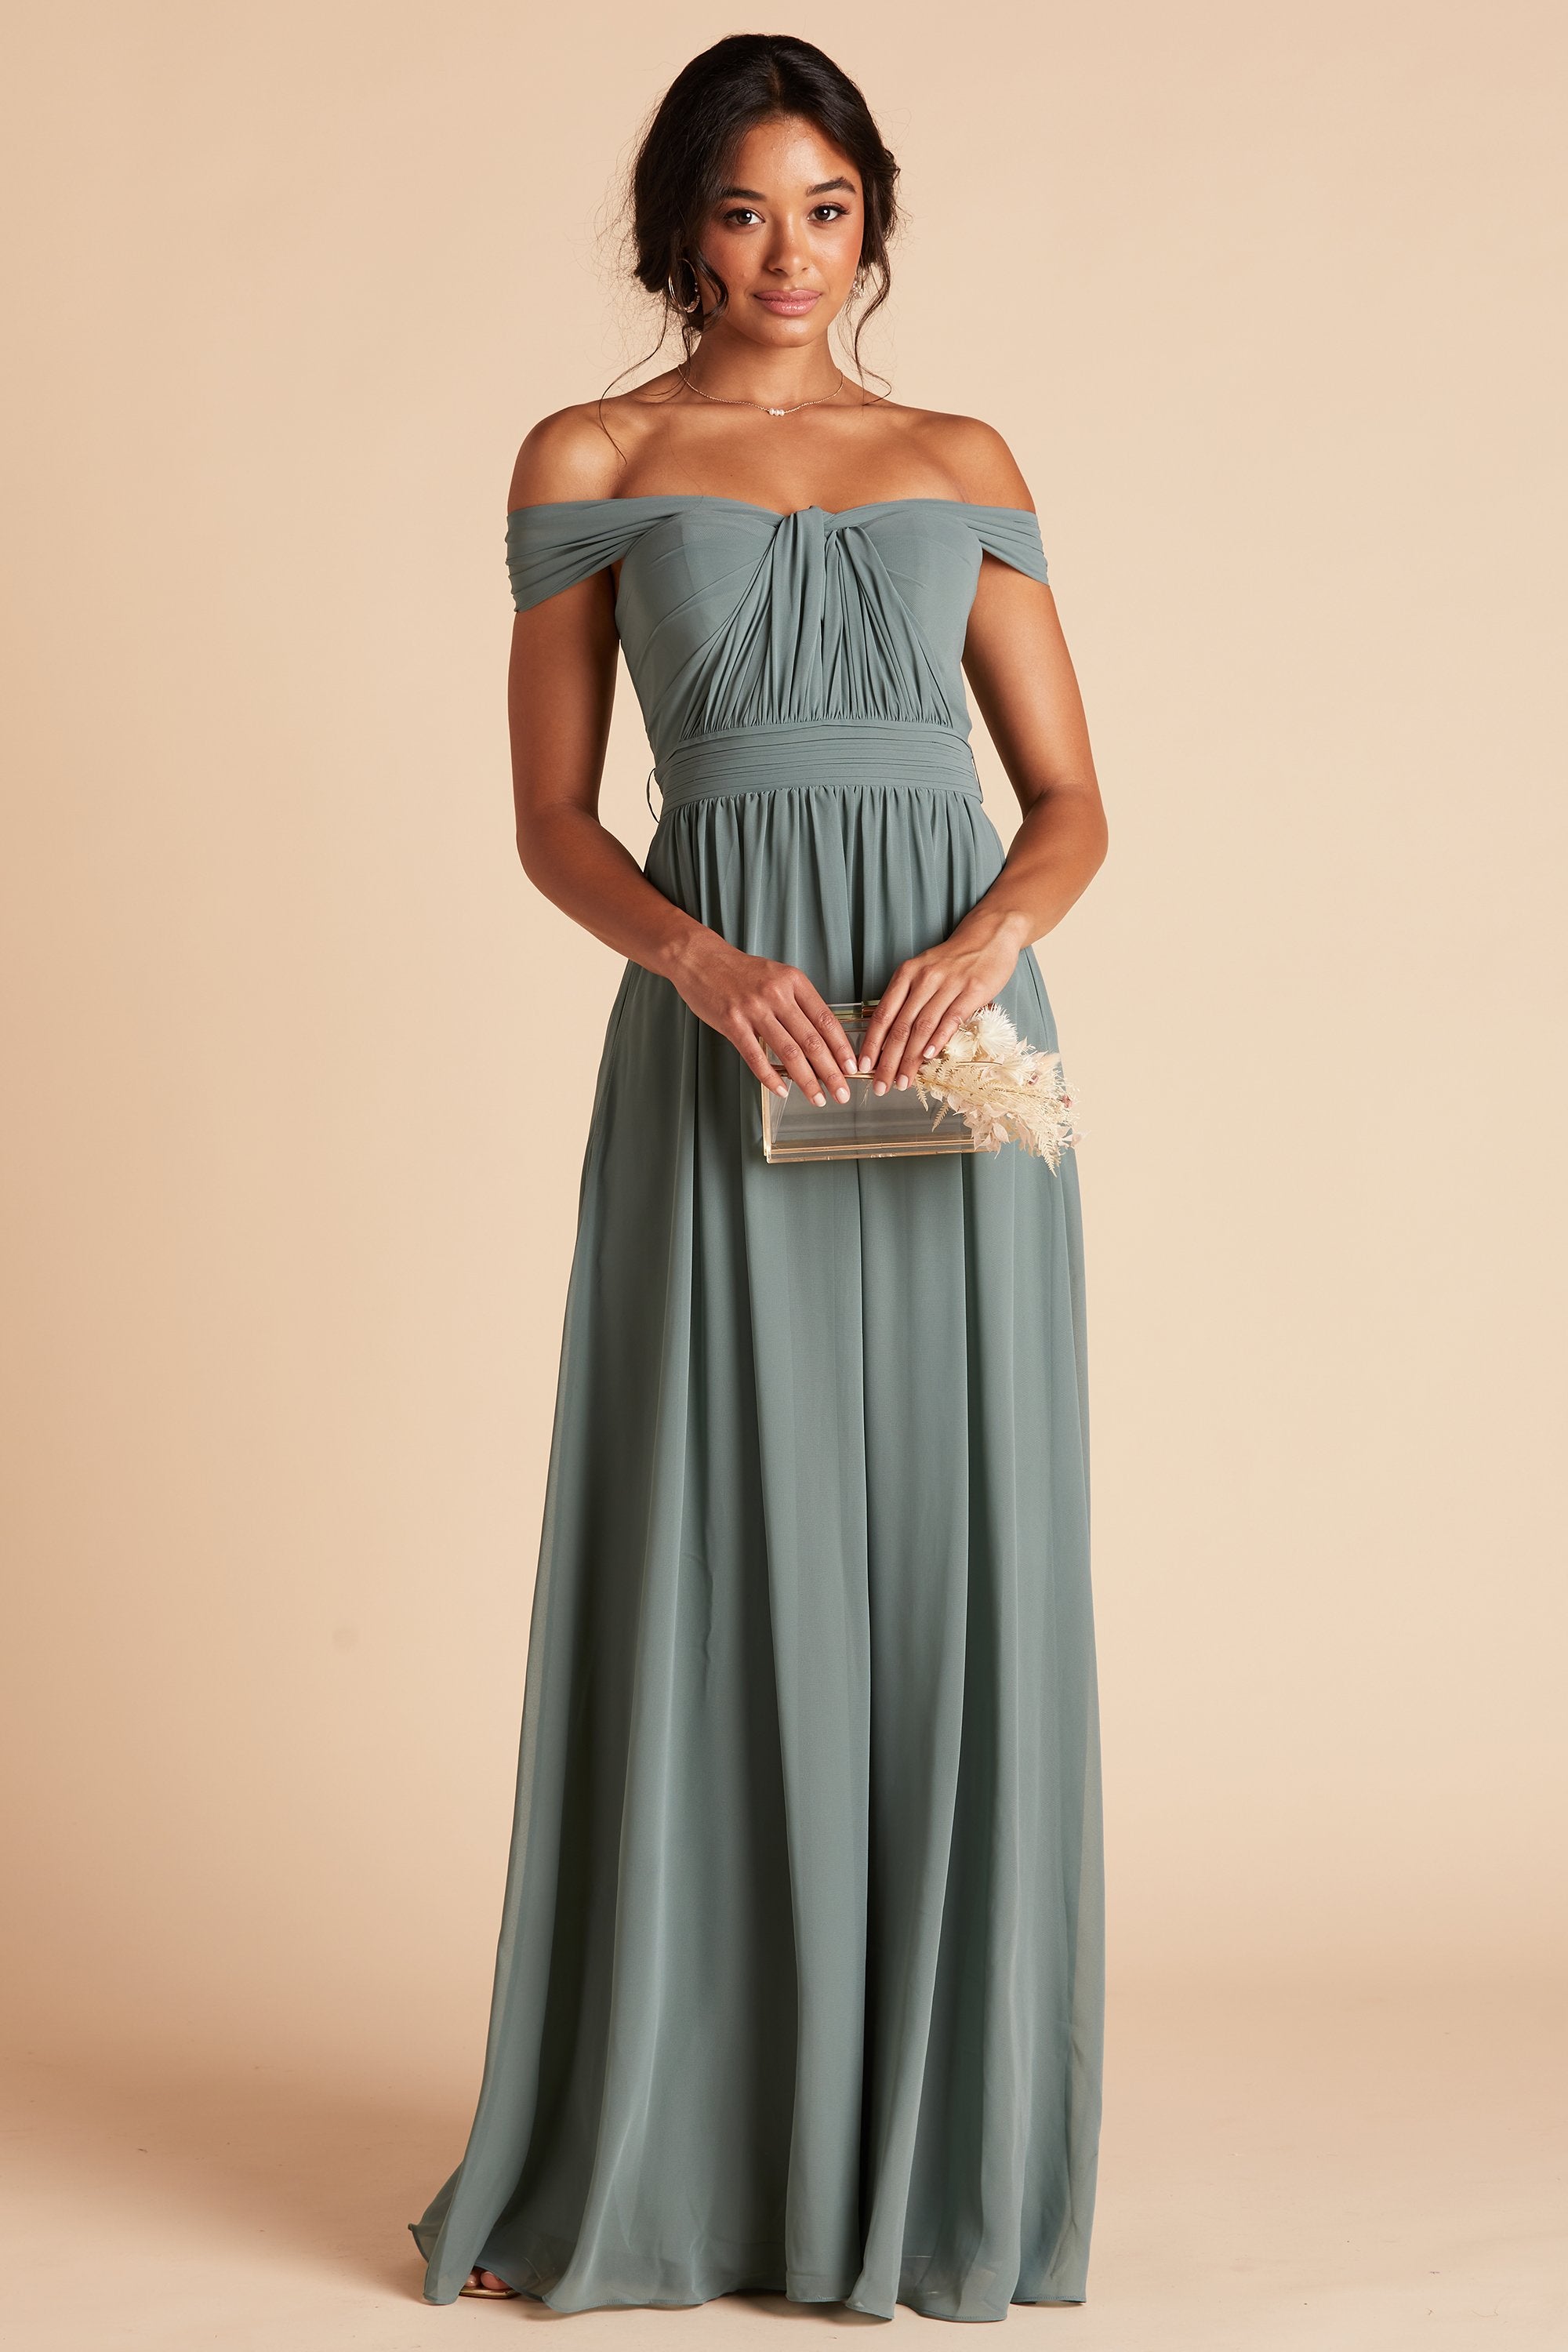 Loop Dress - The Ultimate Bridesmaid Convertible Dress